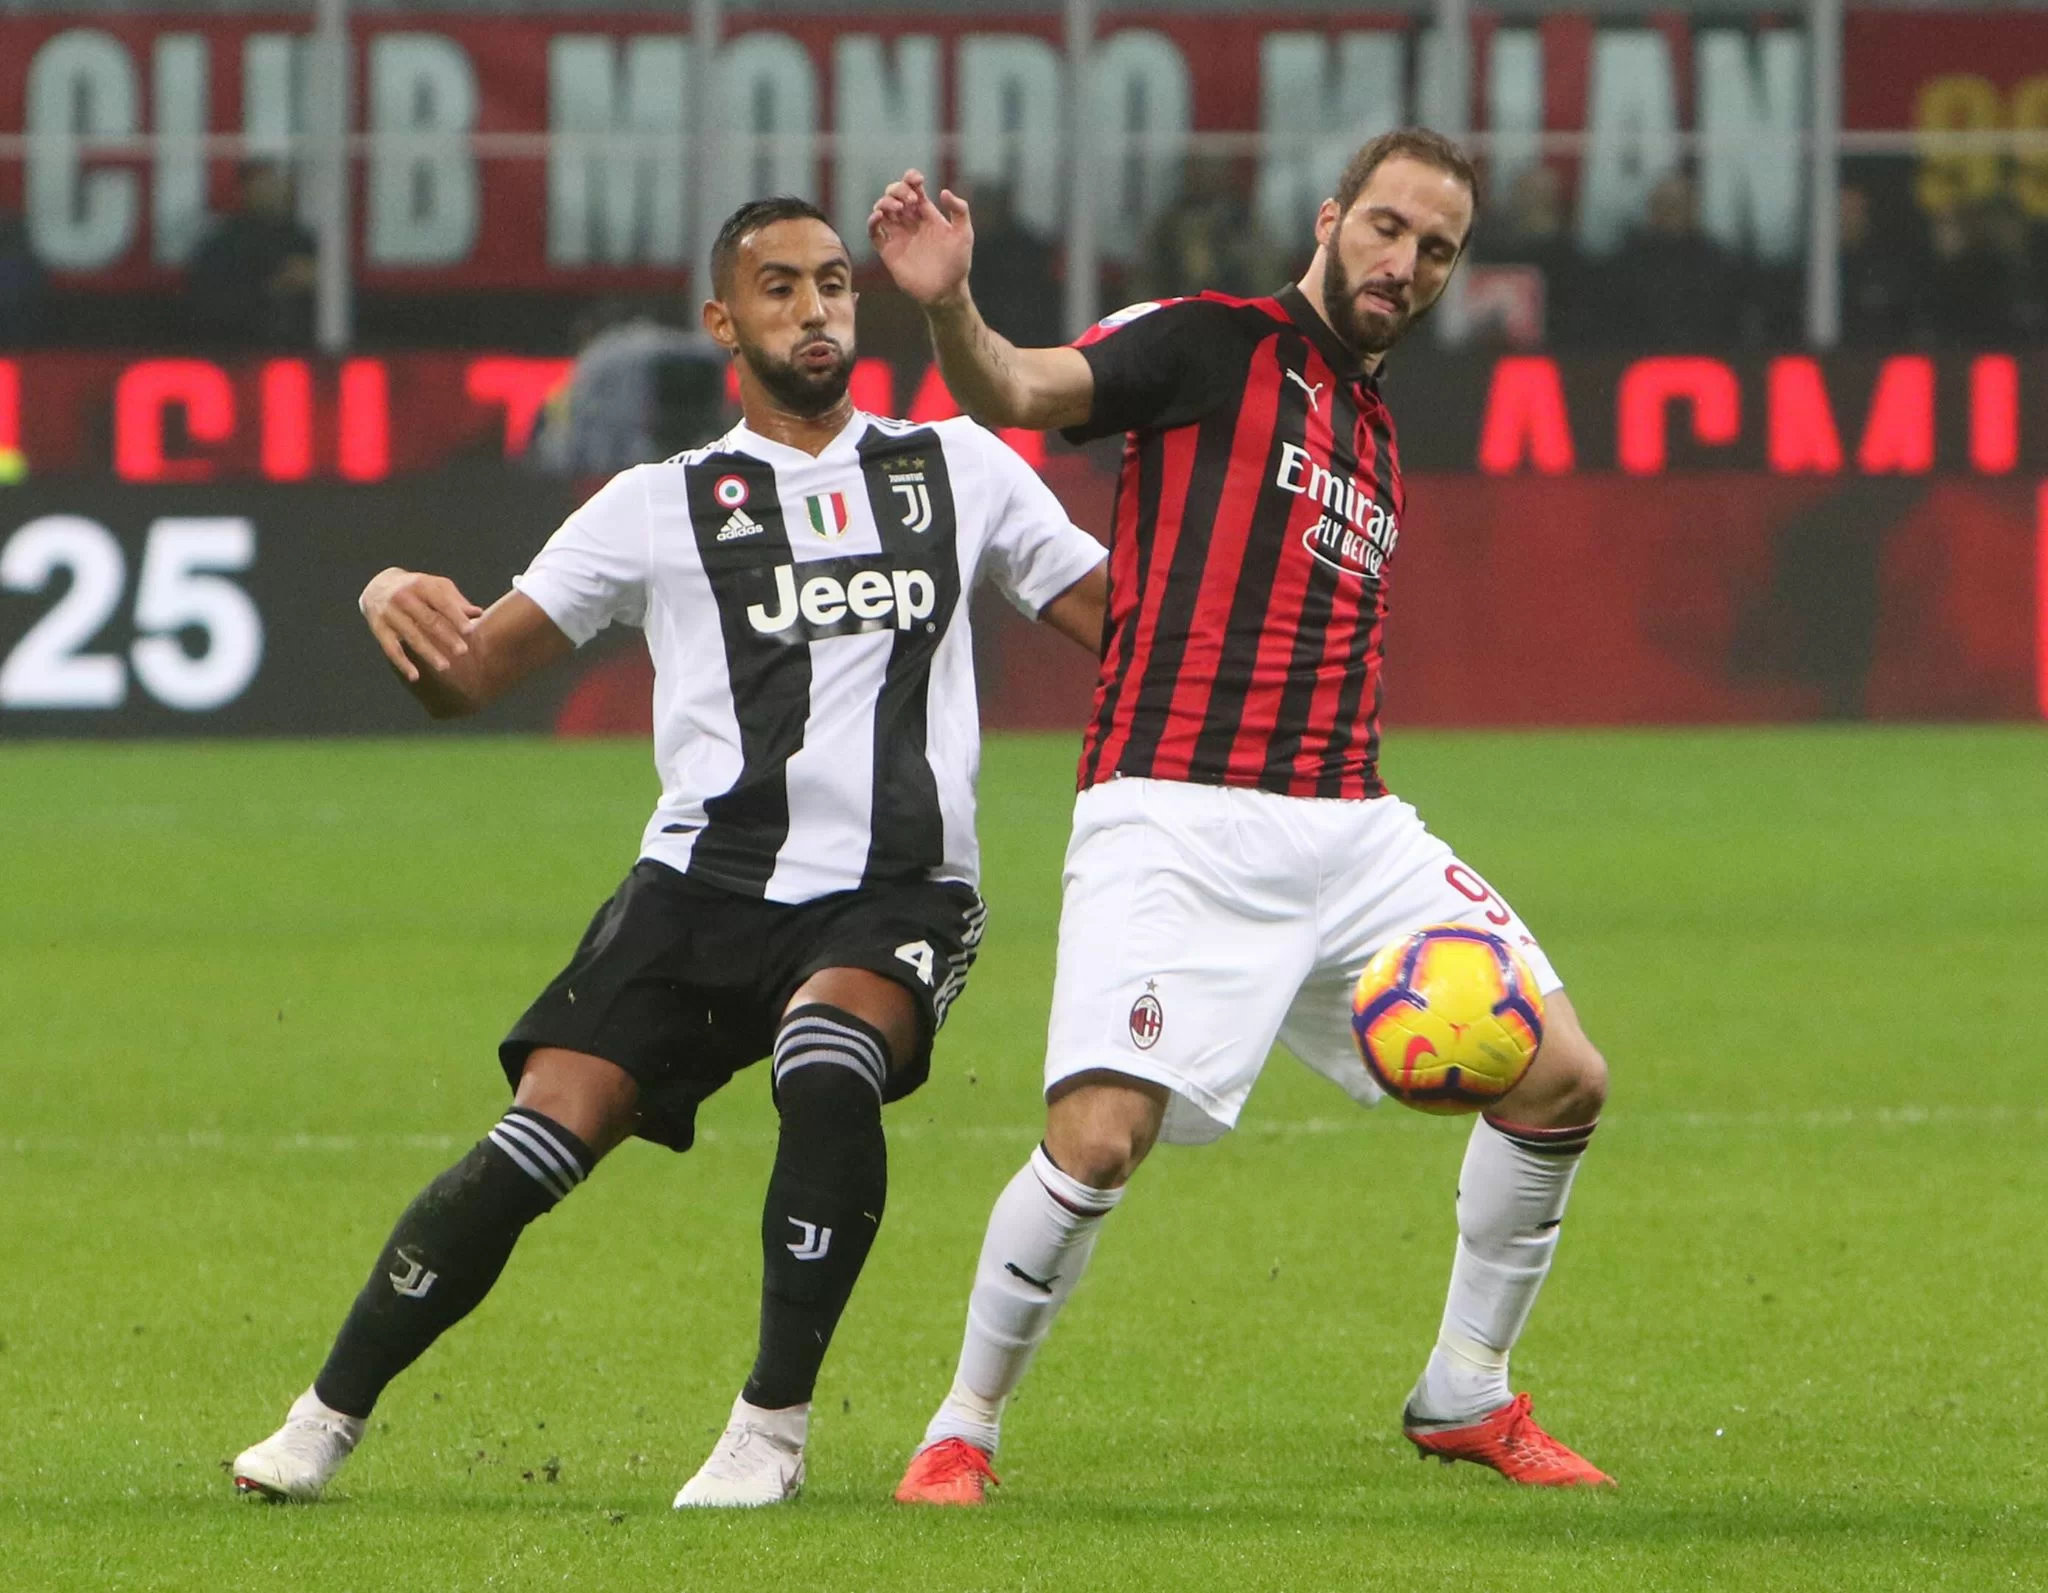 Milan-Juventus, le pagelle rossonere: disastro Higuain, sorpresa Bakayoko